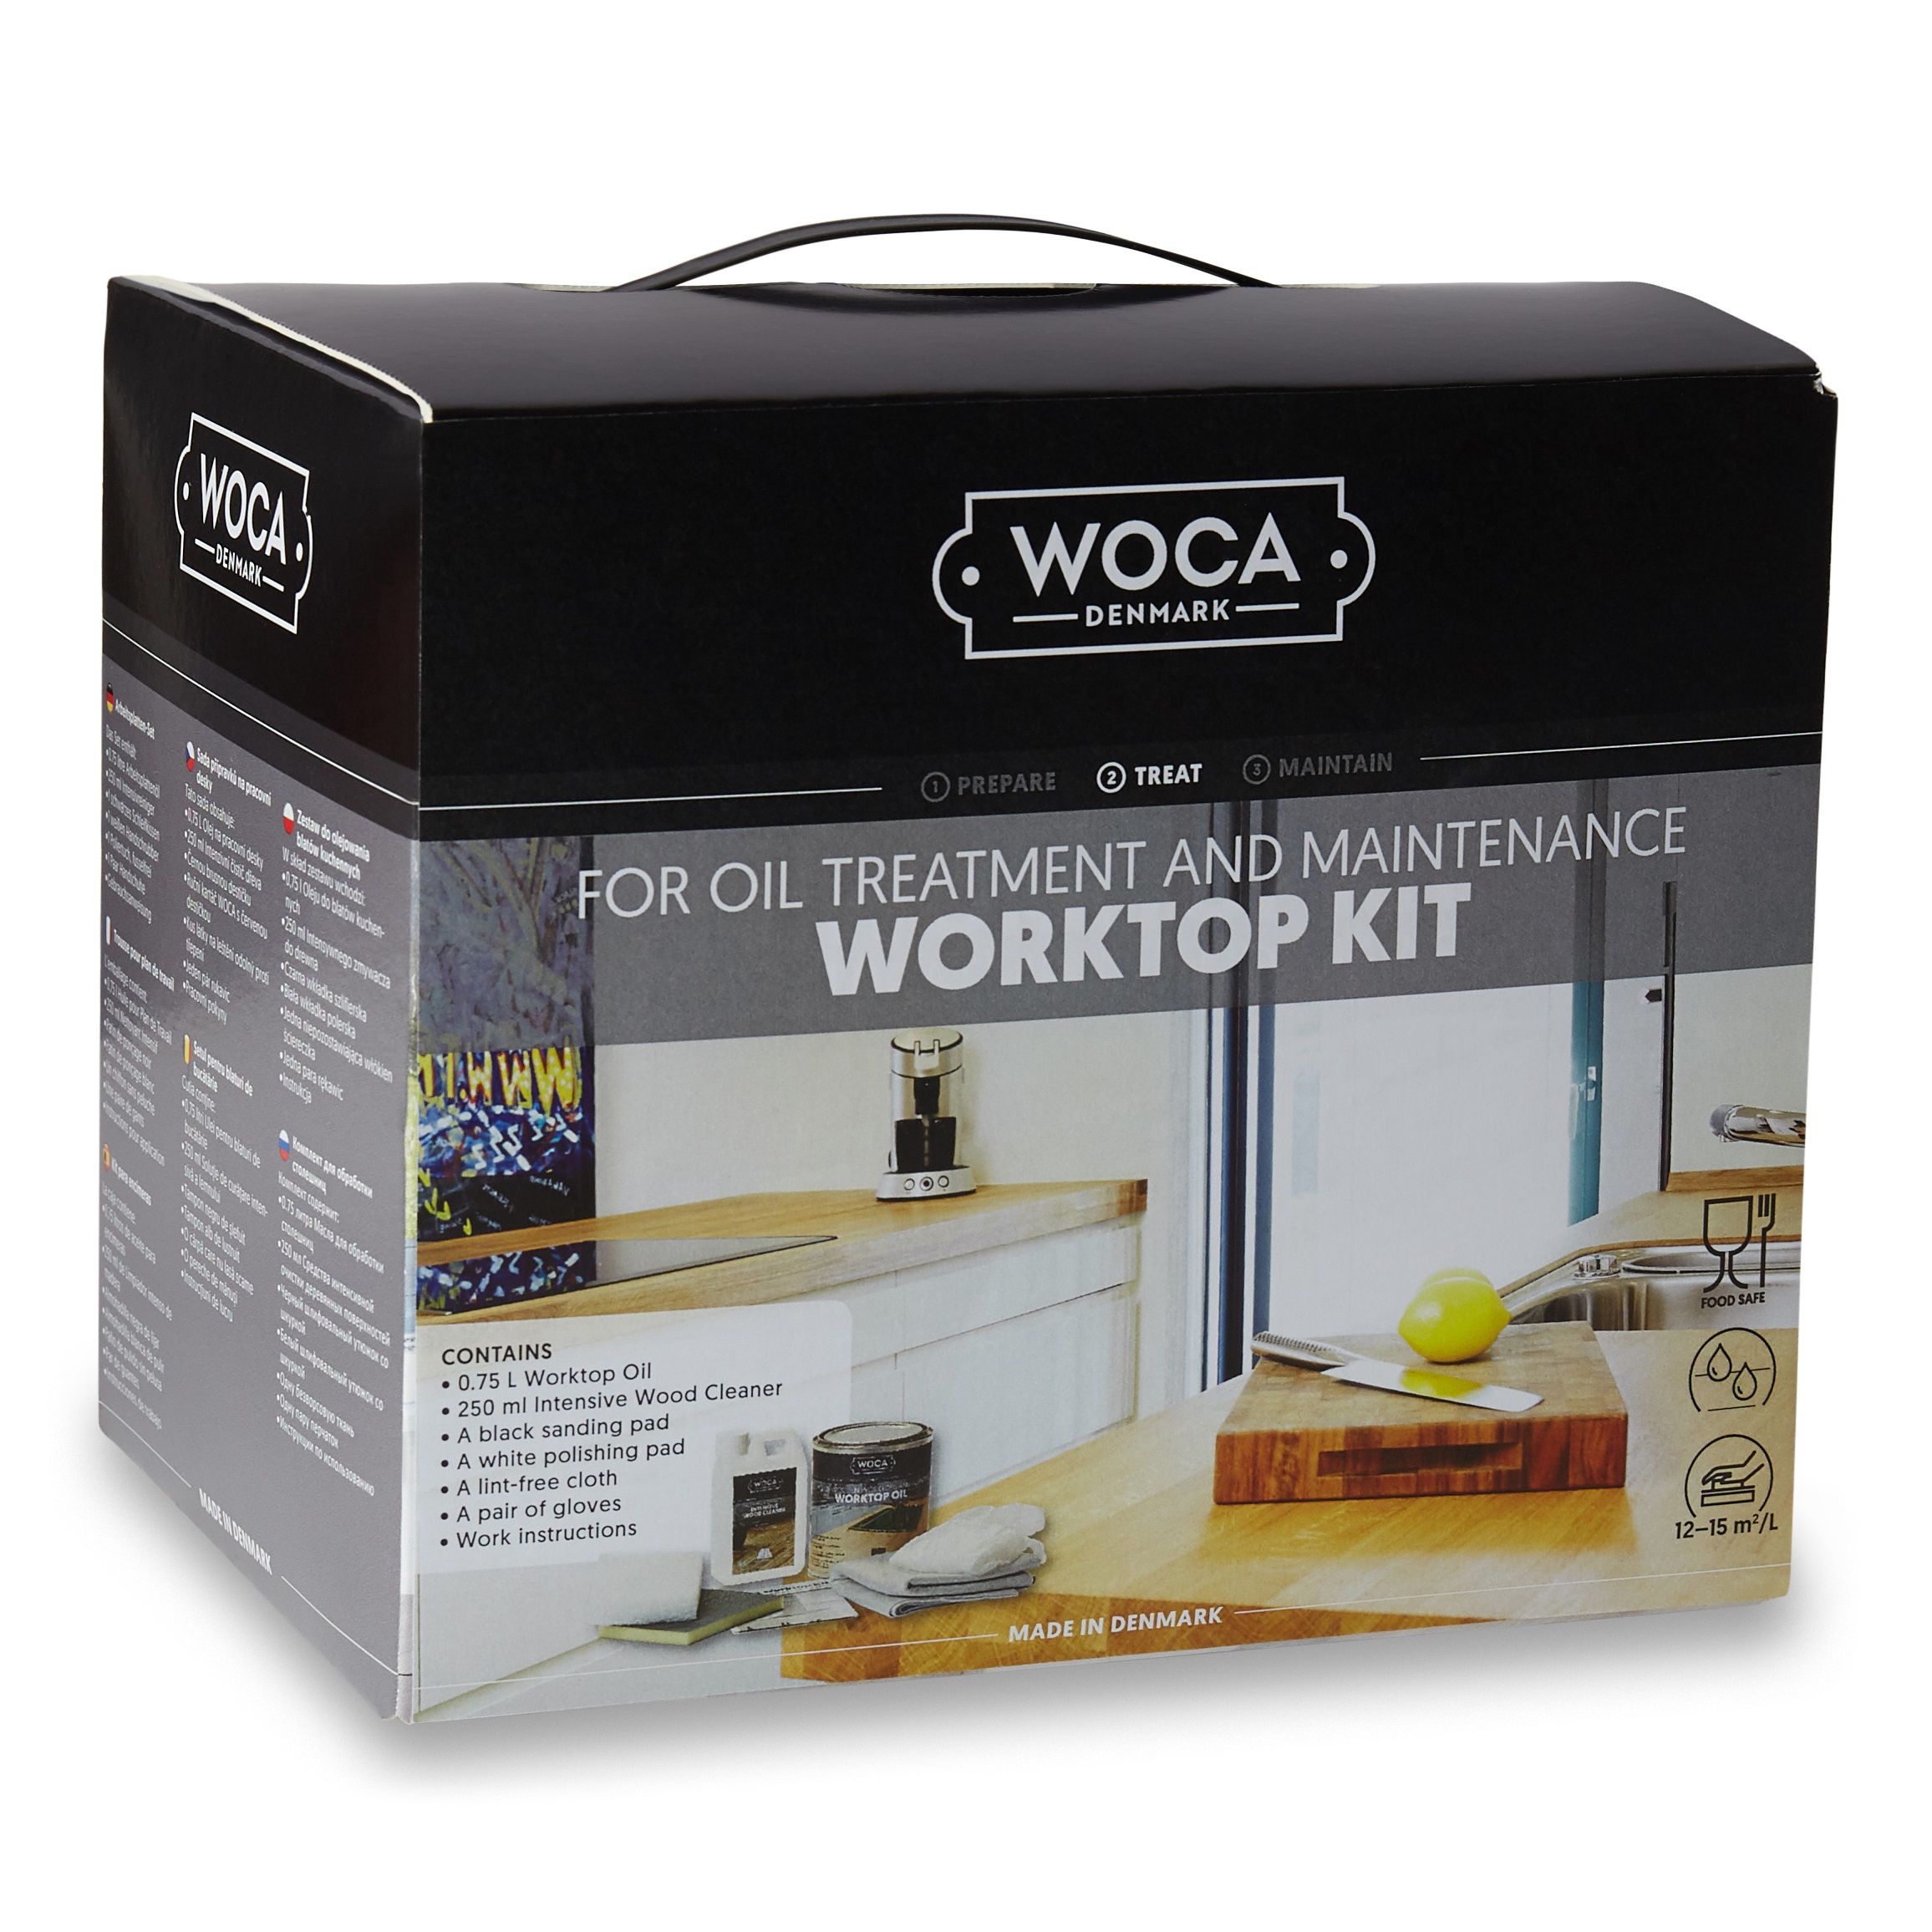 WOCA DK Worktop care & maintenance kit